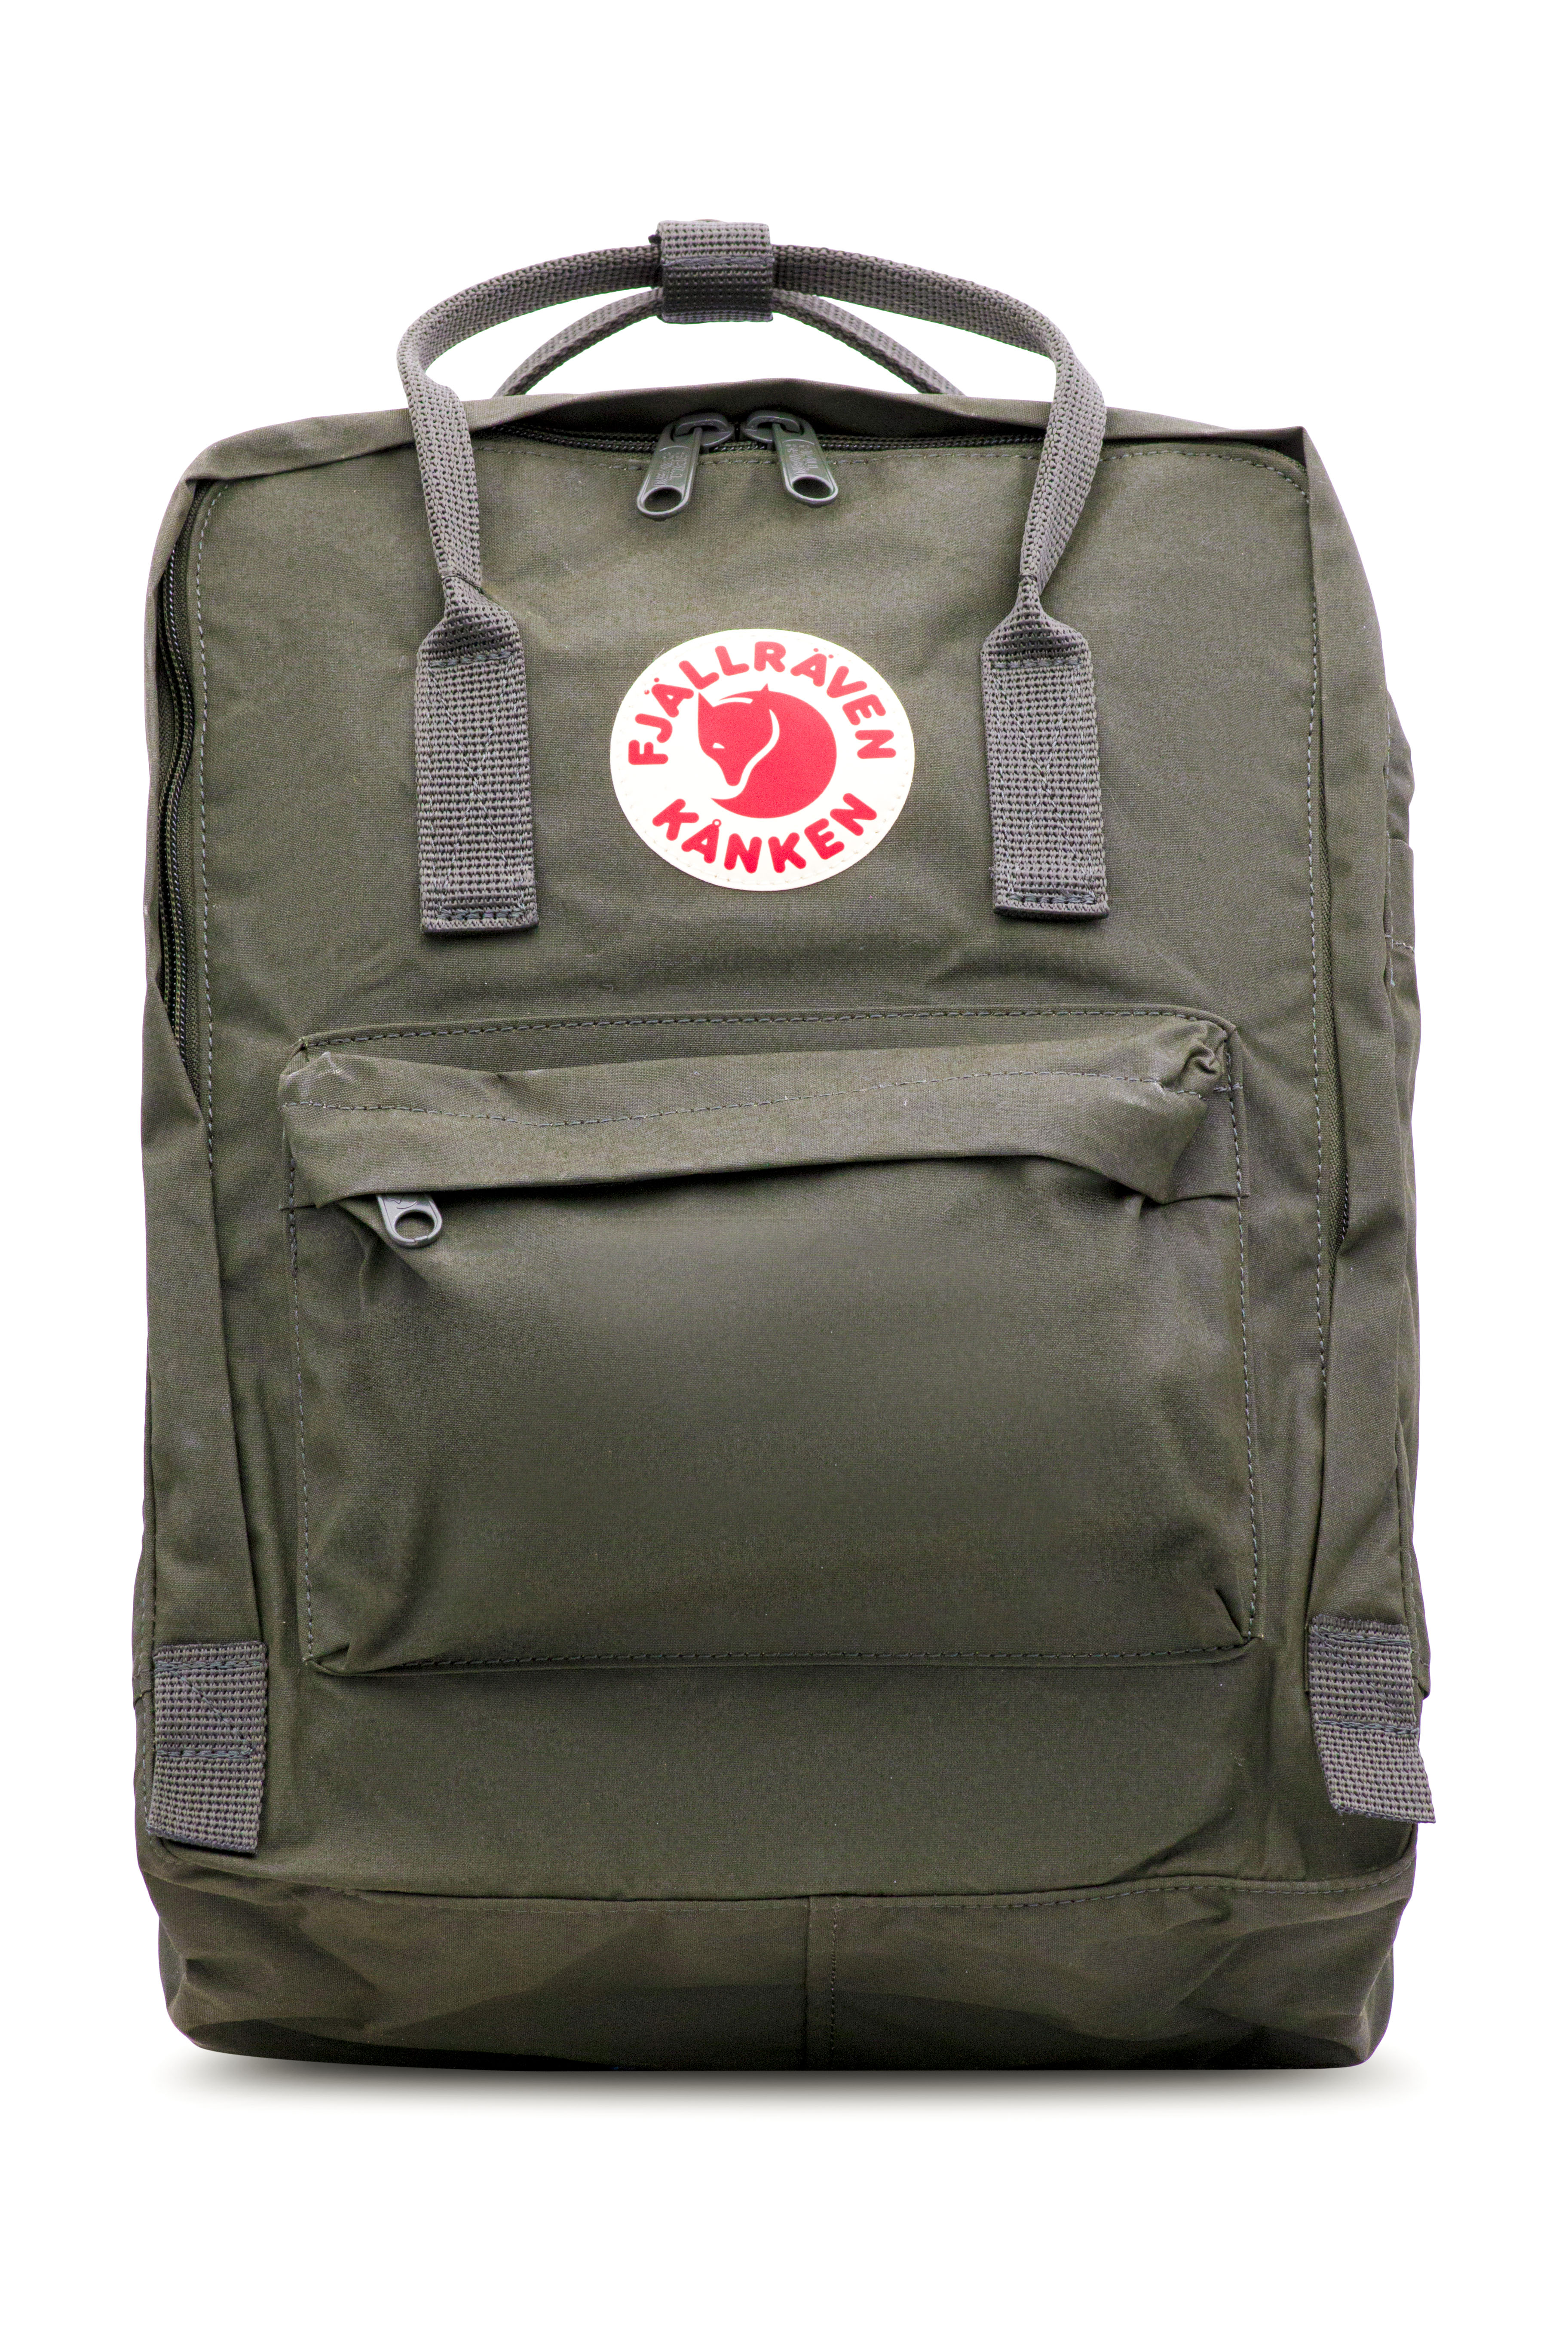 Fjallraven - Kanken Classic Backpack for Everyday - Deep Forest